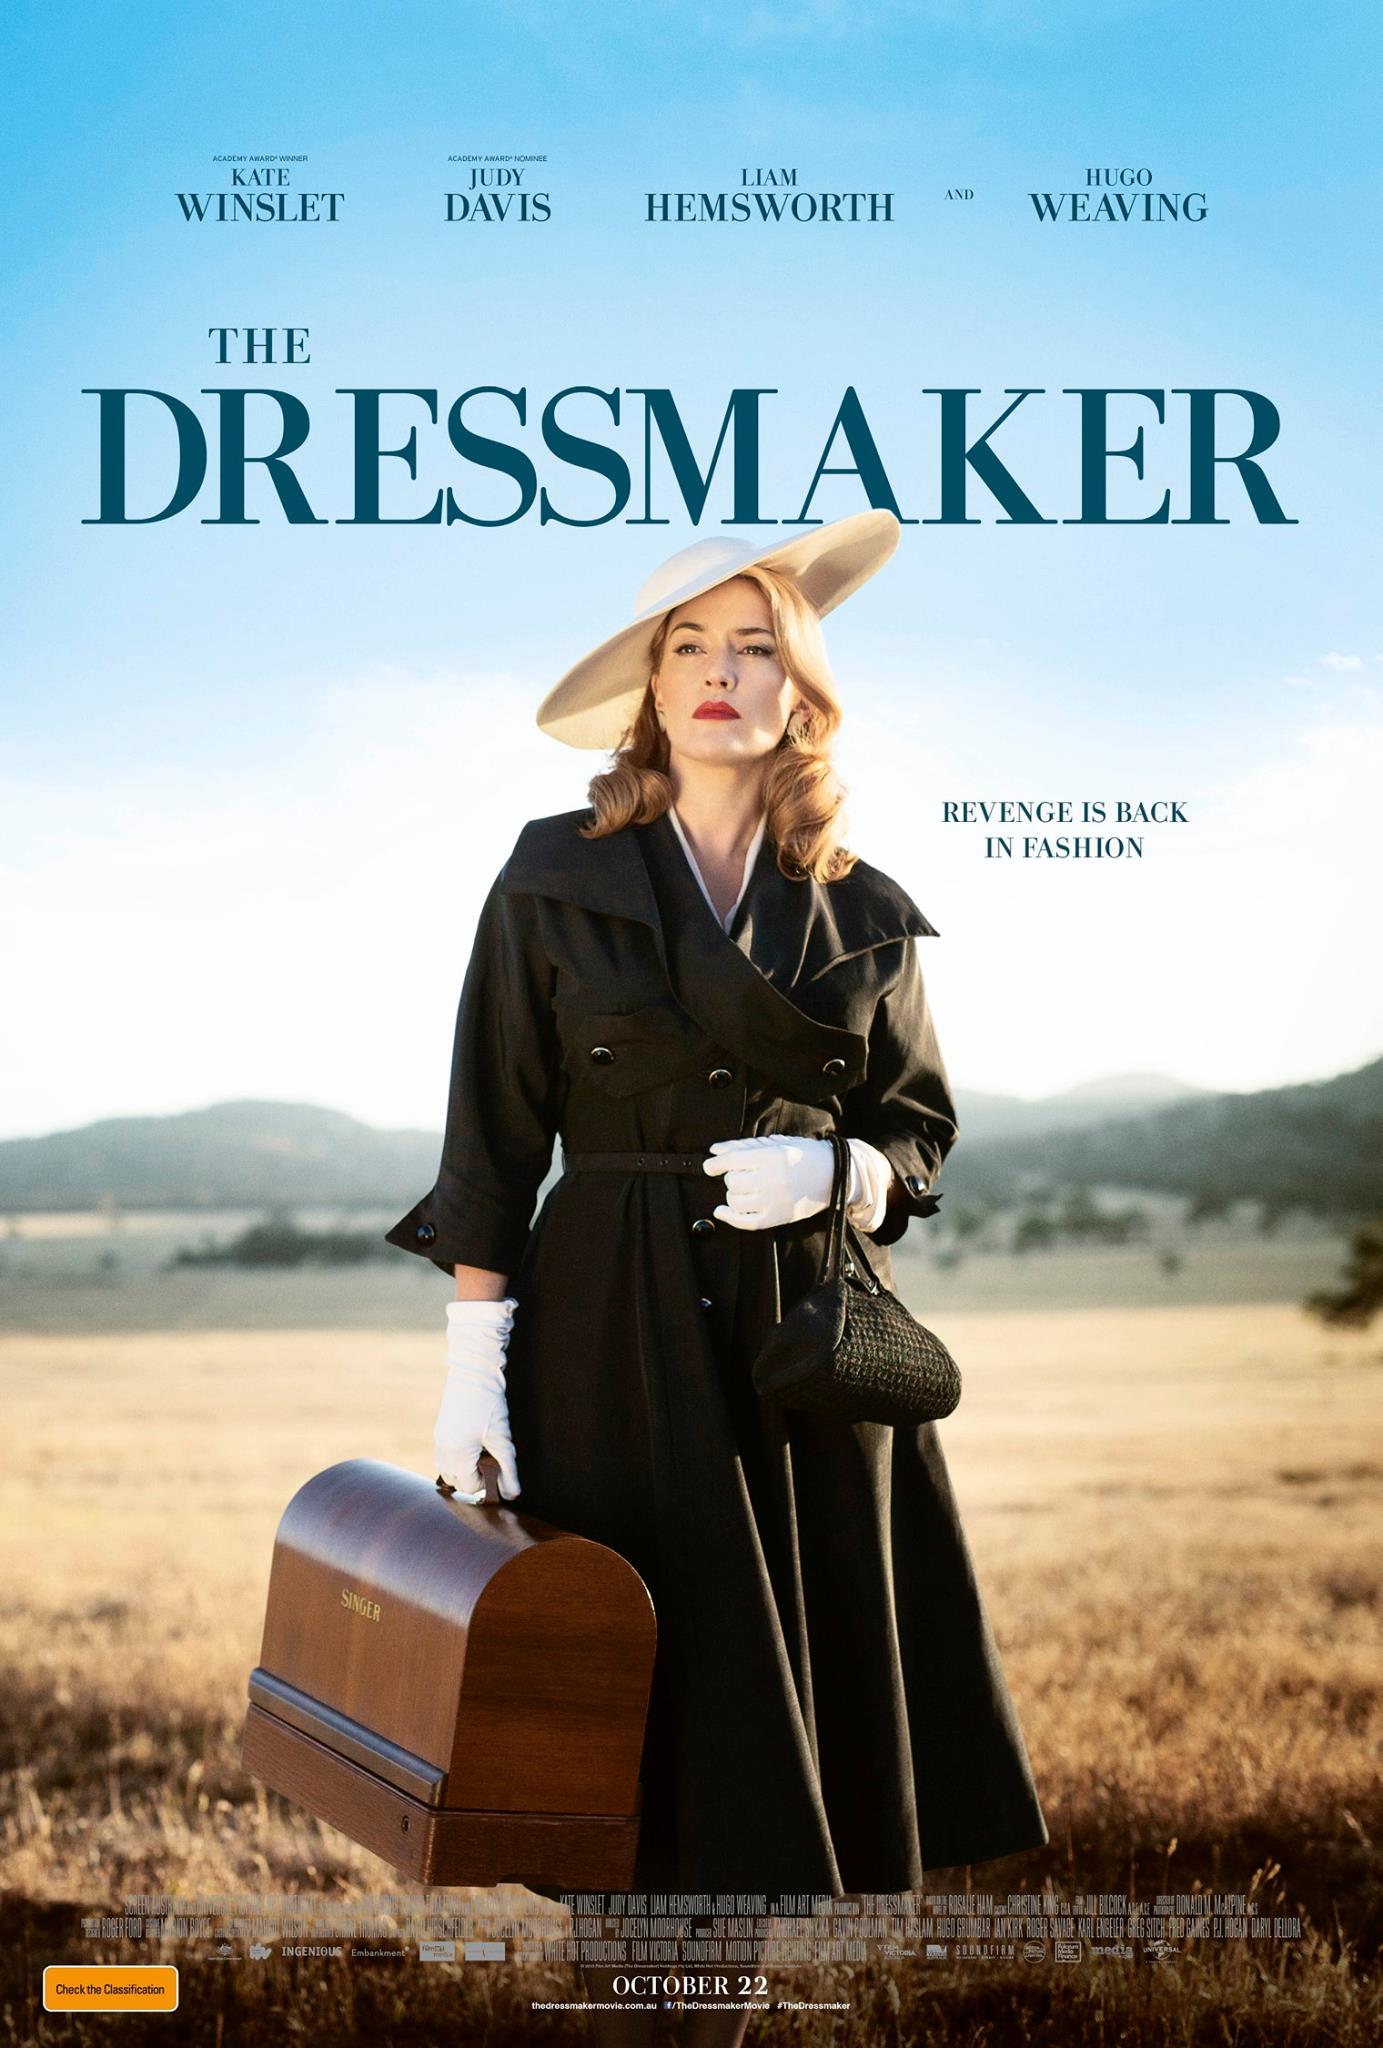 The dressmaker fashion film